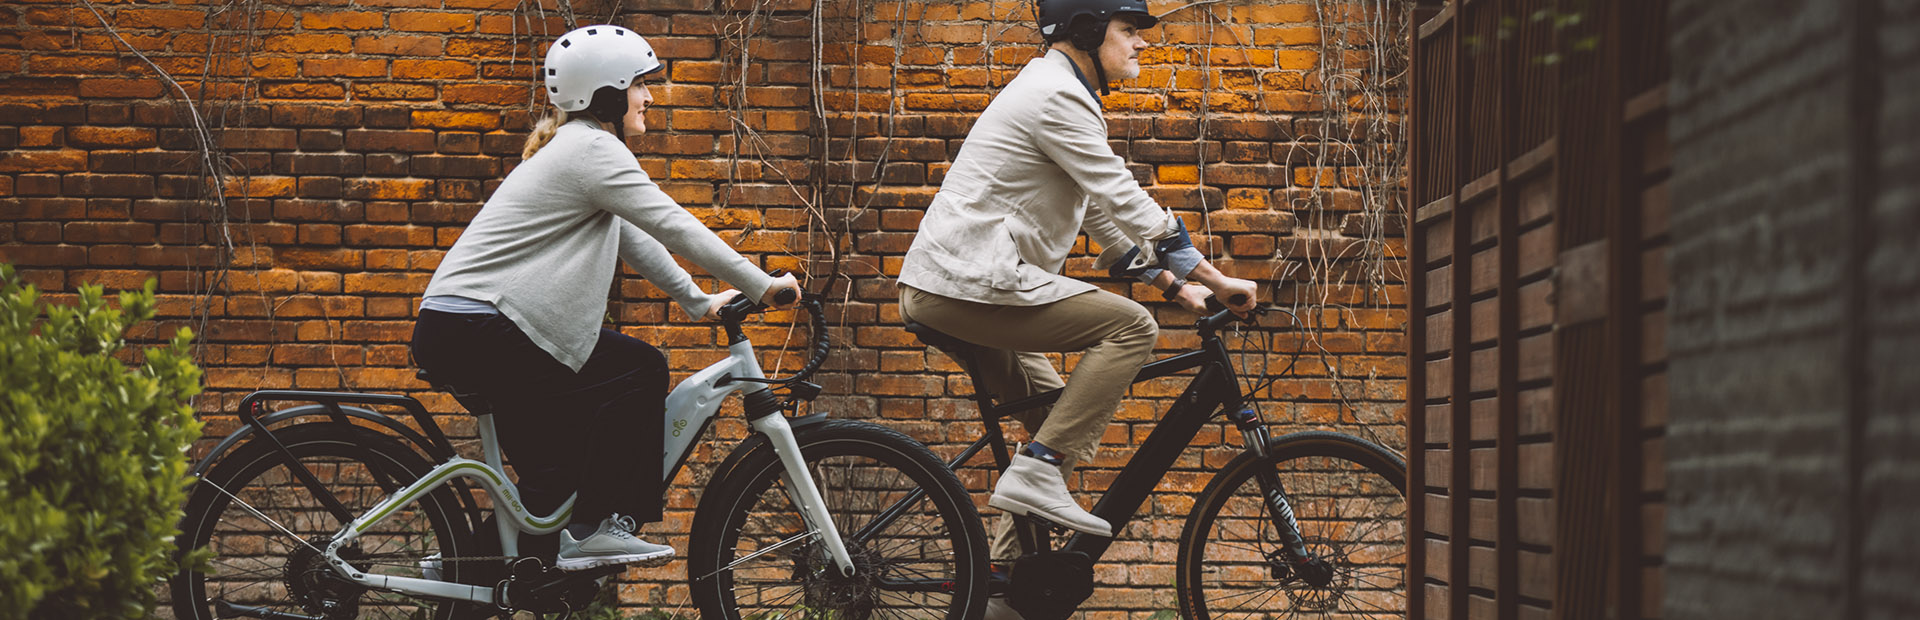 Urbanite Series
Kits for Commuter Electric Bikes